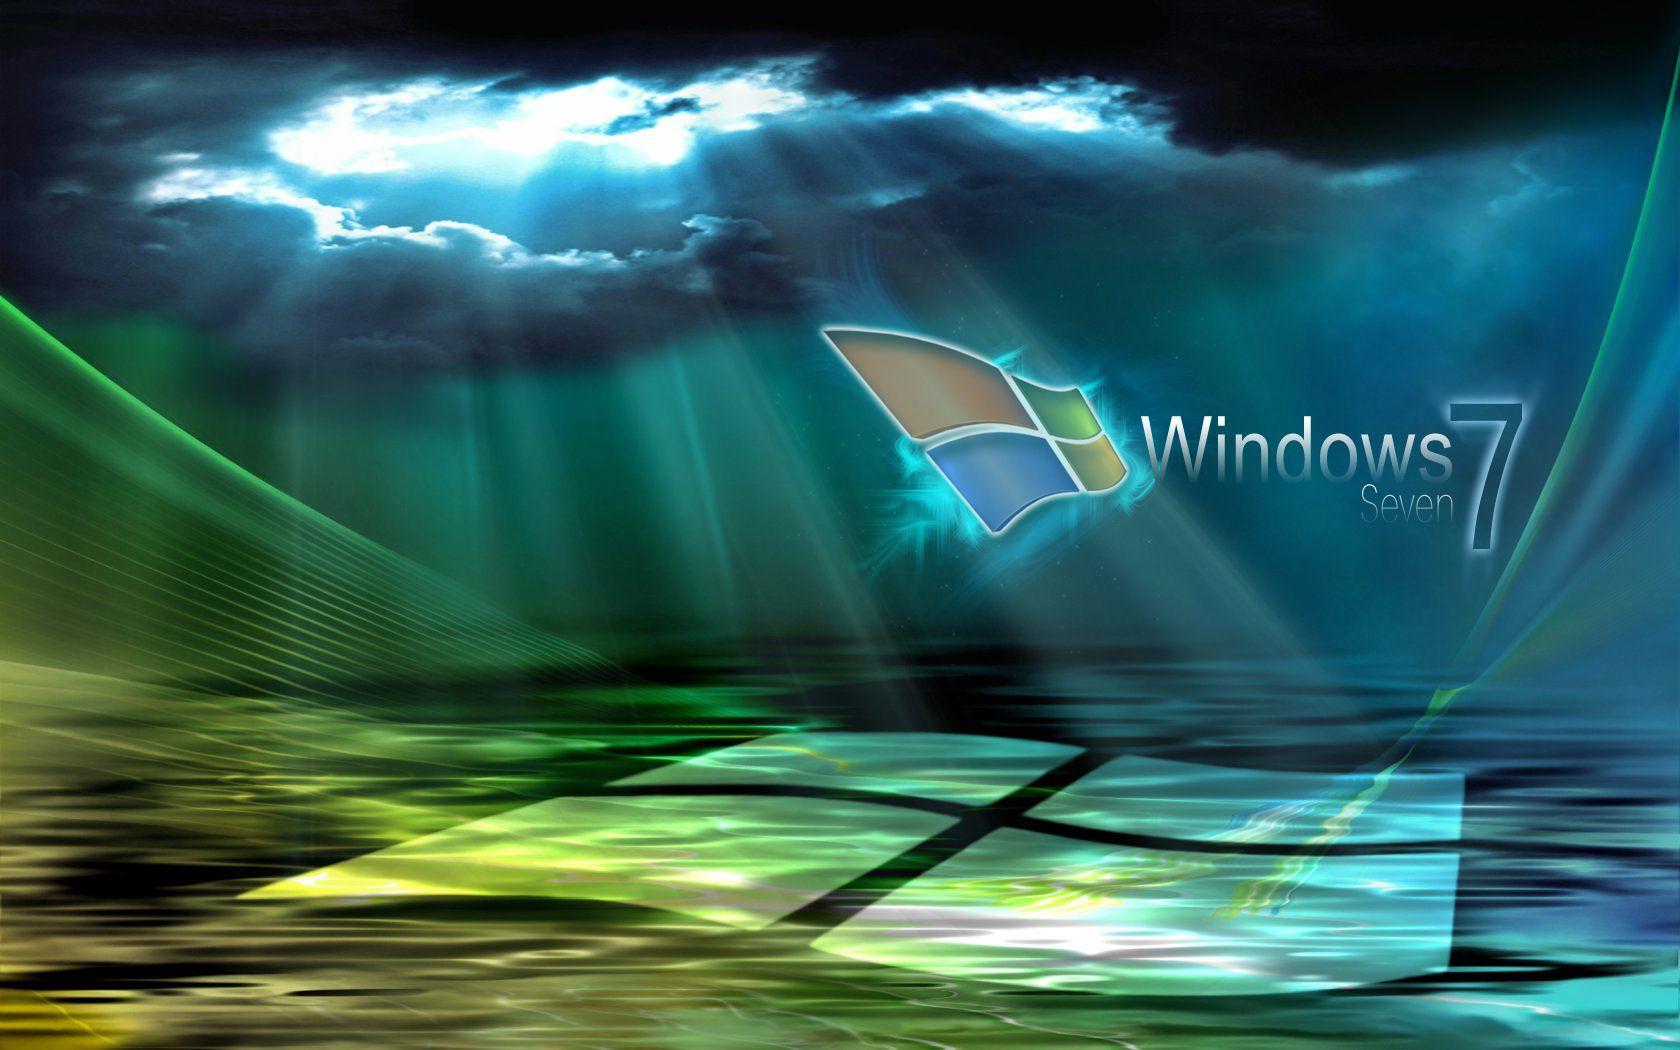 Windows 7 Desktop wallpaper 3D 4K Ultra HD Windows 7 Background